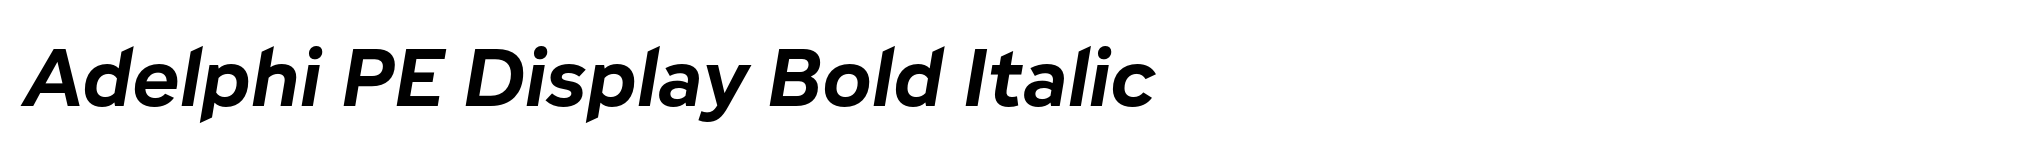 Adelphi PE Display Bold Italic image